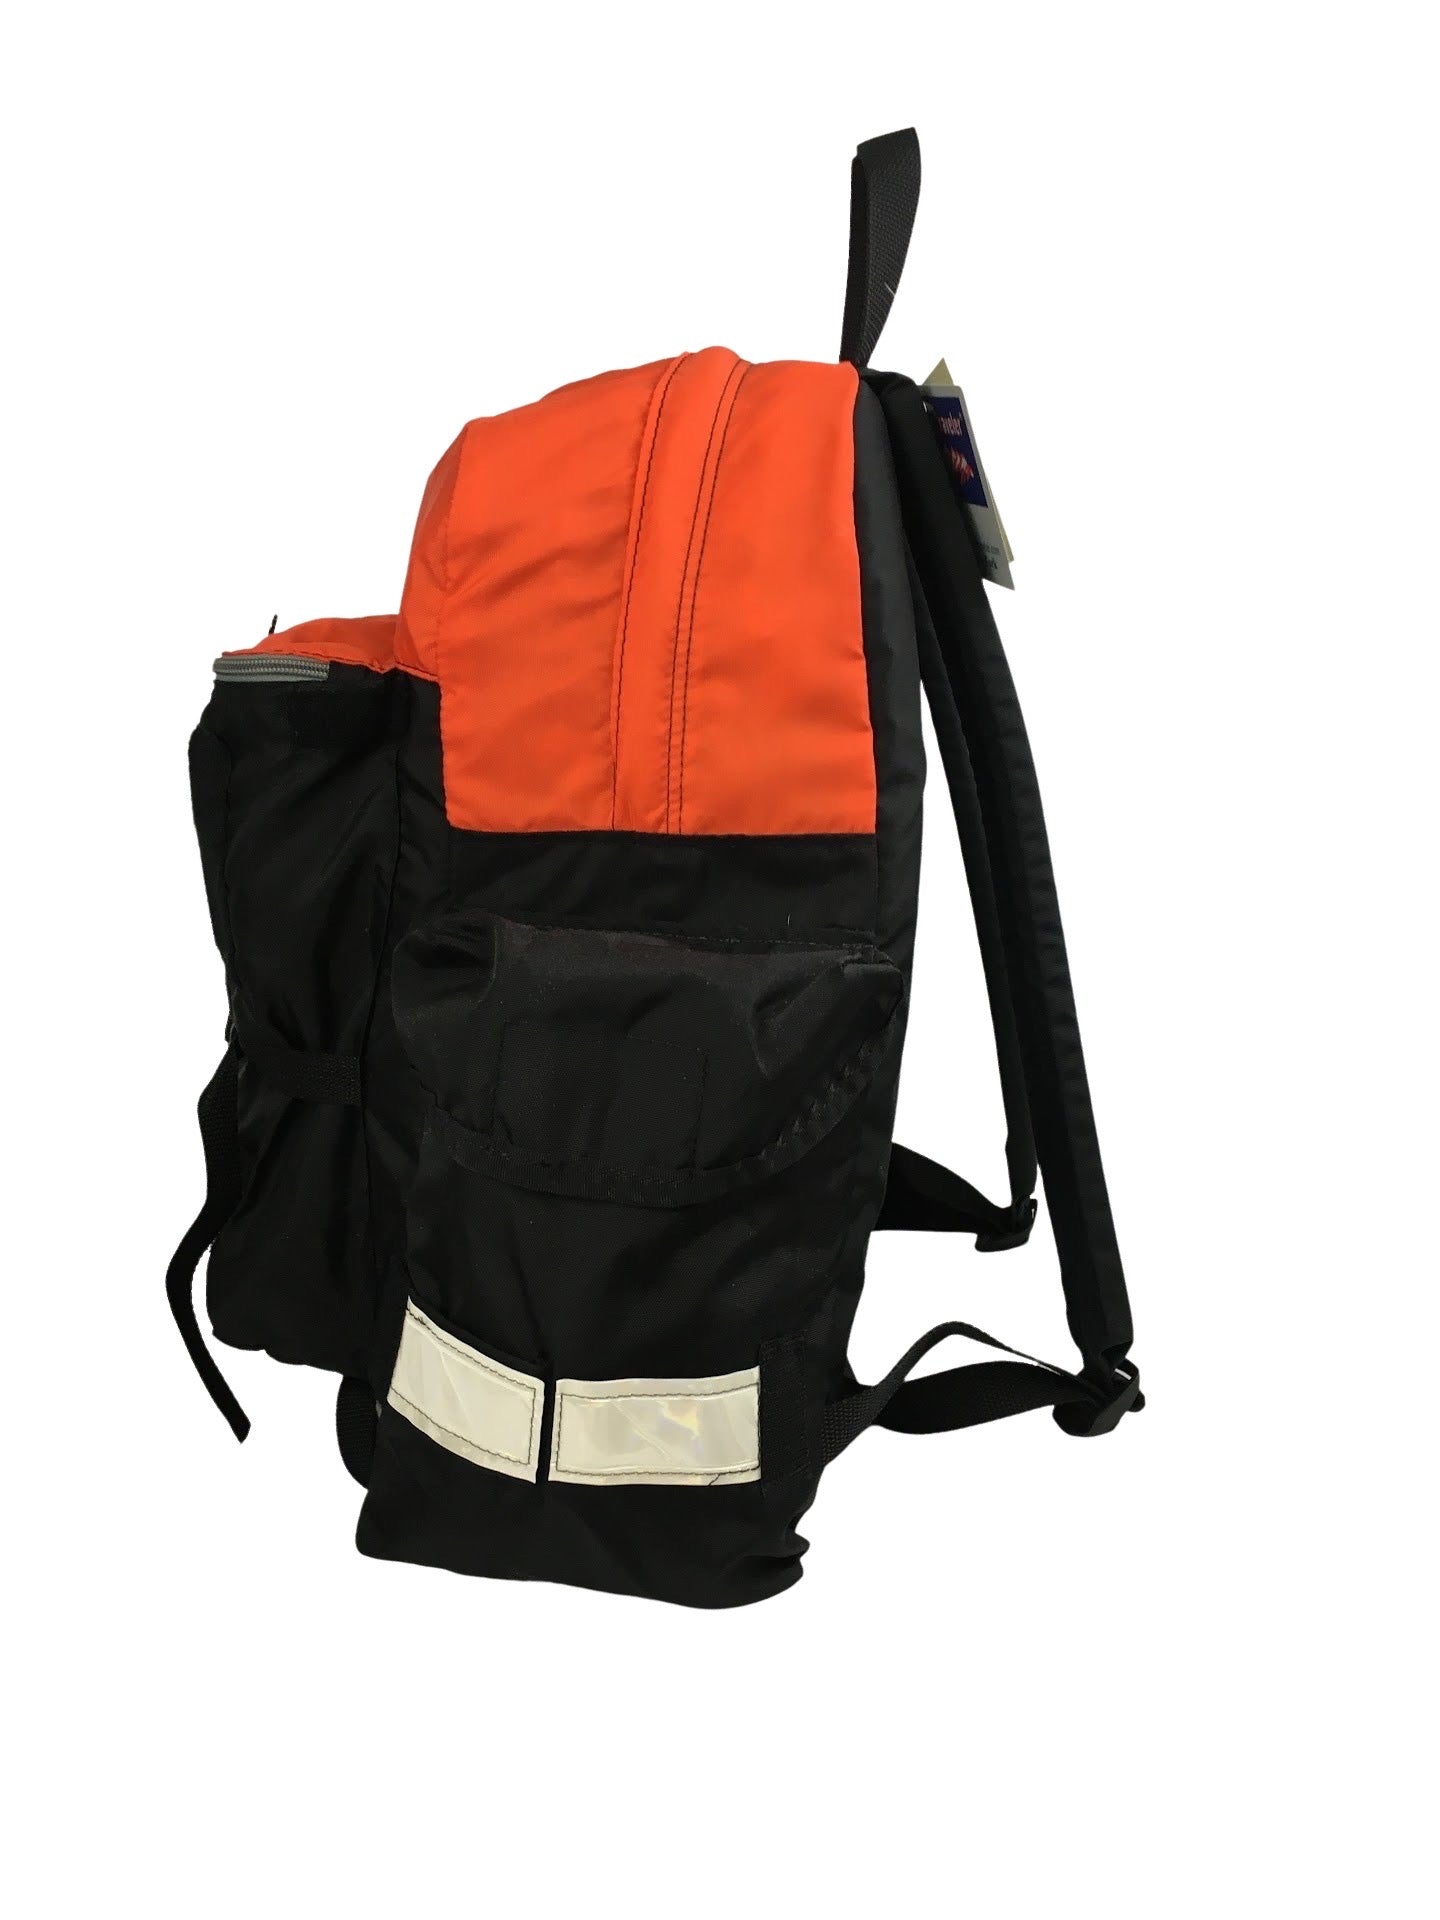 Made in USA TREKCOM Laptop Backpack Laptop Backpacks